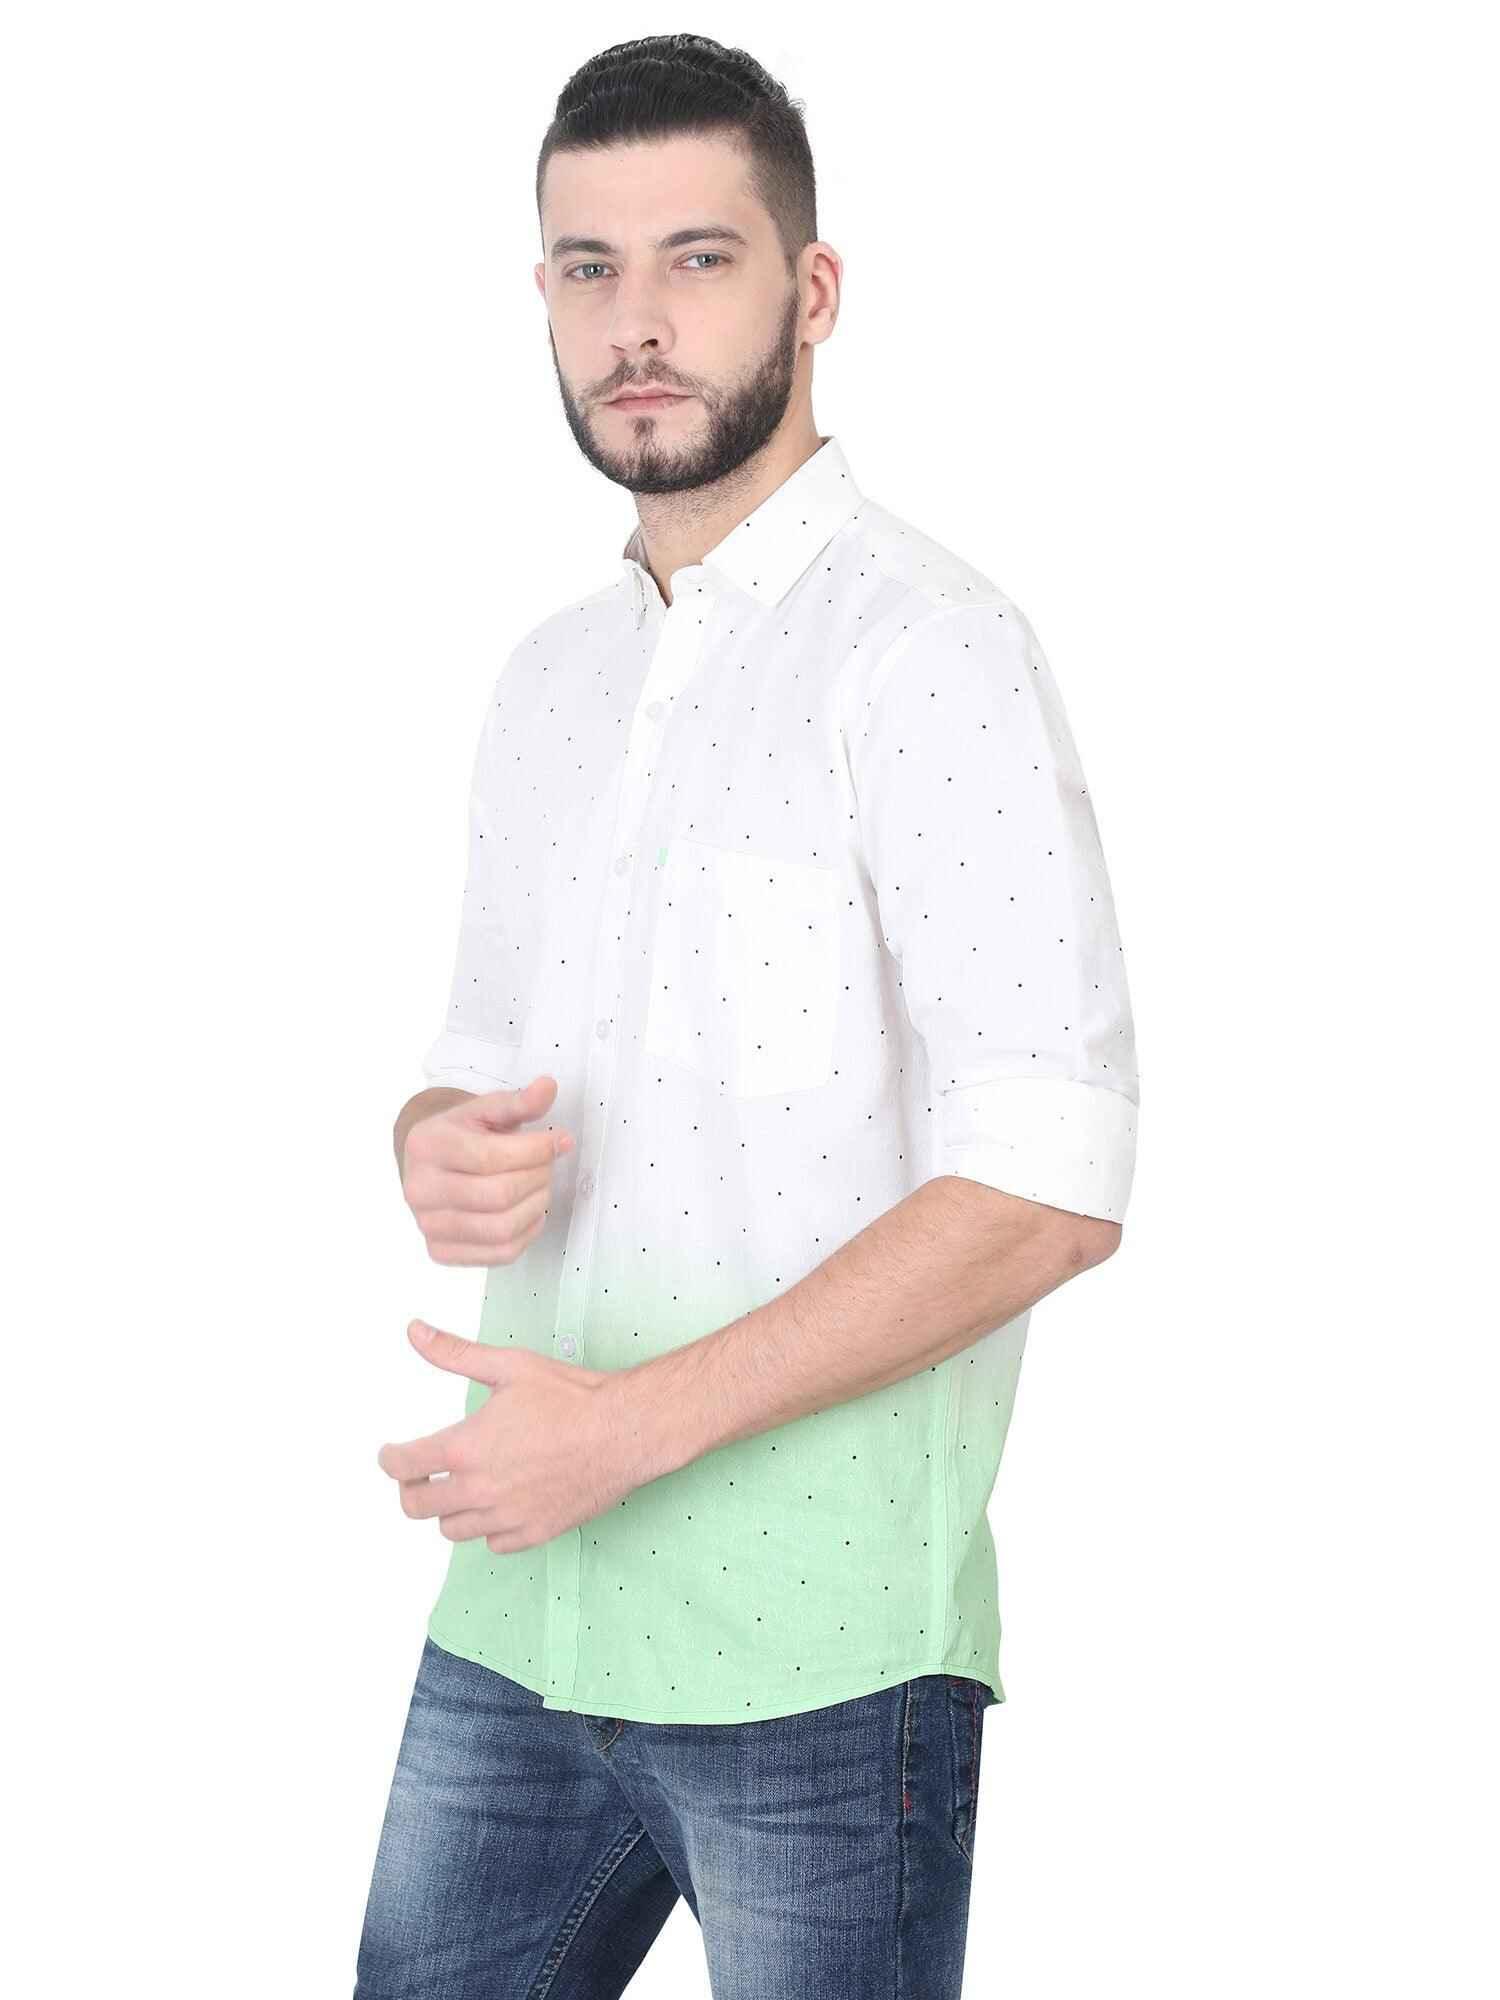 Light Green Ombre Digital Printed Linen Full Shirt - Guniaa Fashions